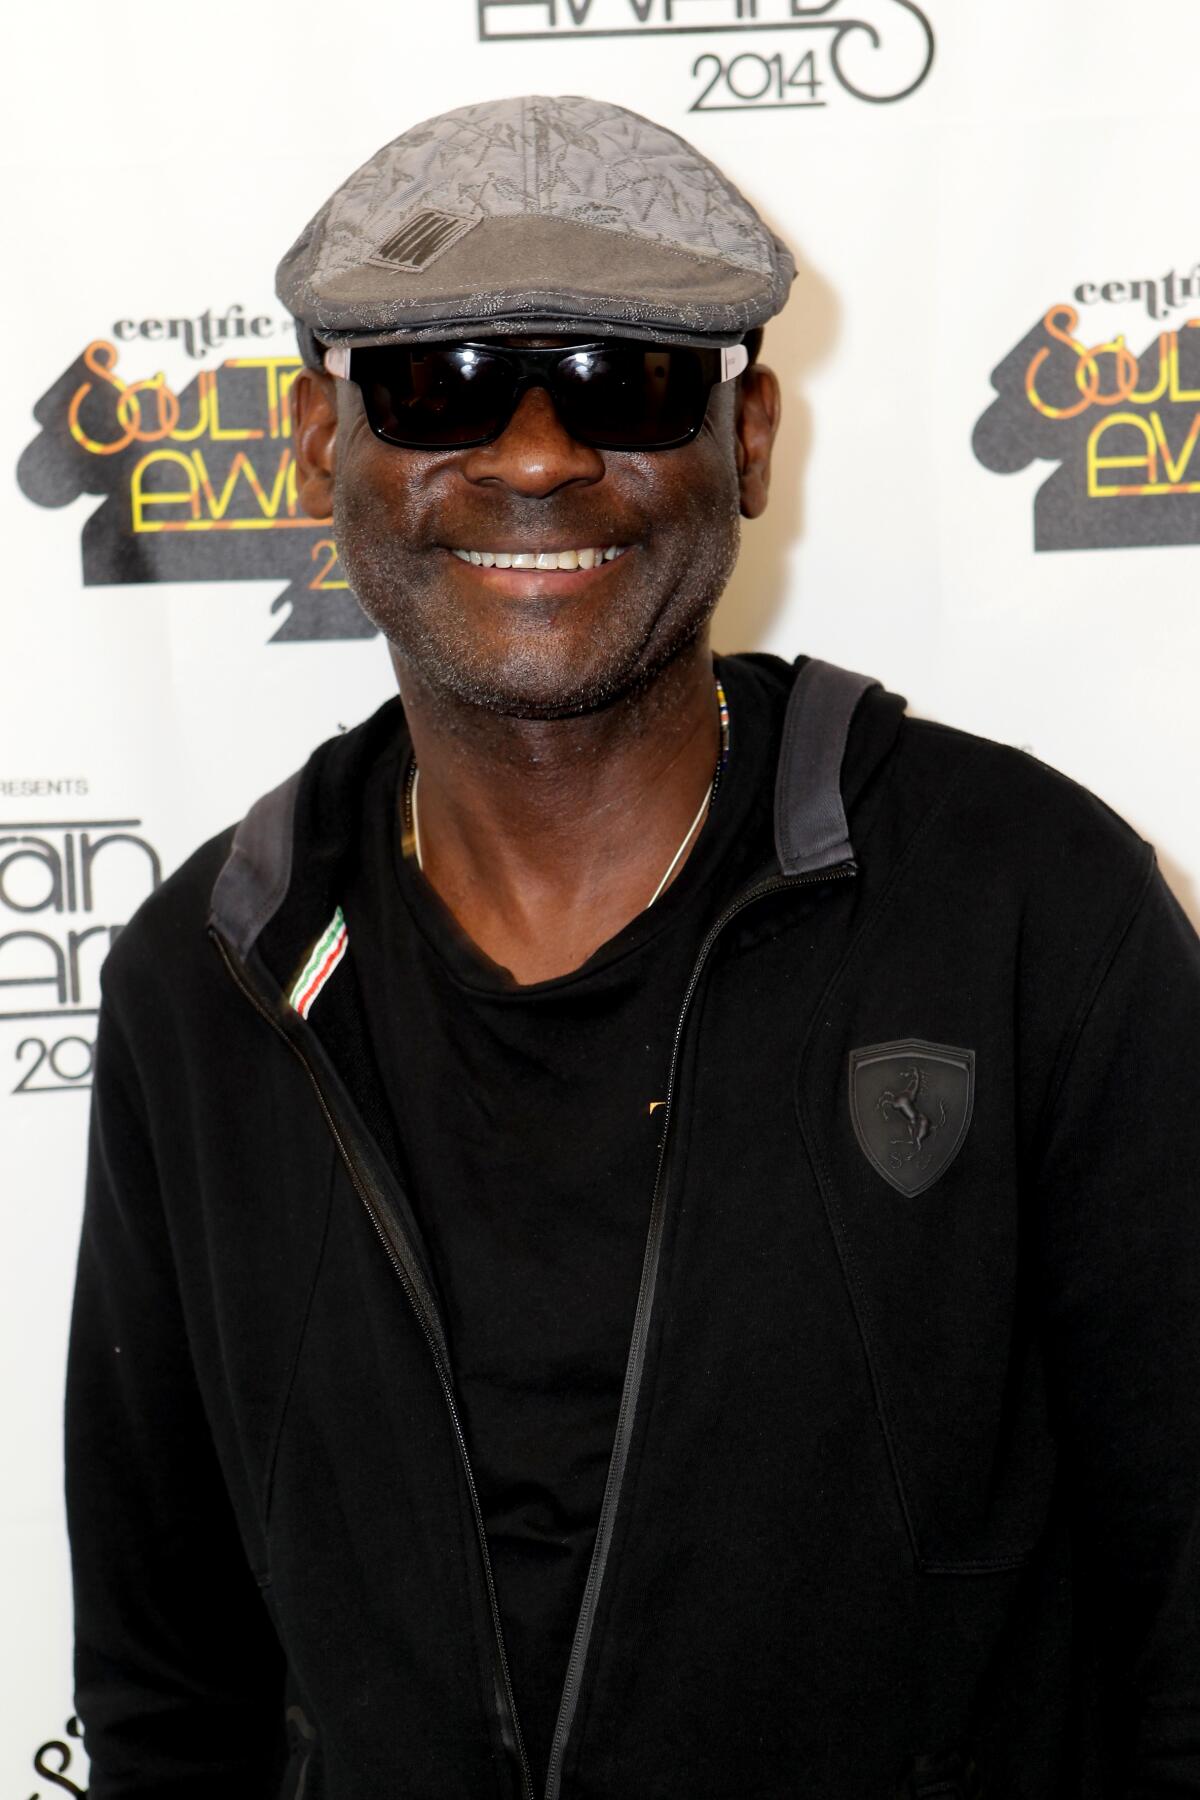 An R&B musician in sunglasses and a cap